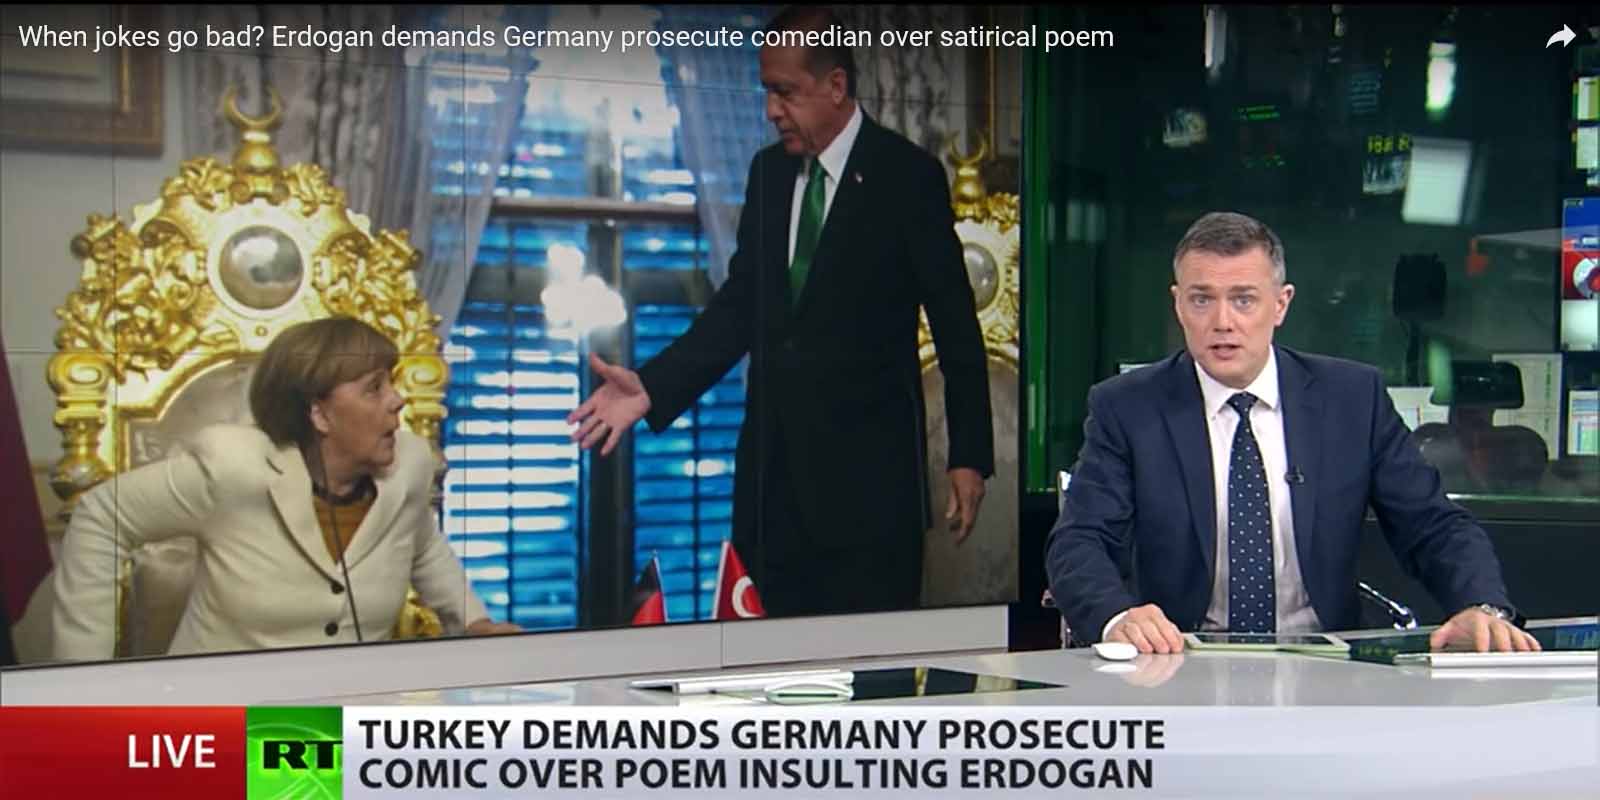 When jokes go bad? Erdogan demands Germany prosecute comedian over satirical poem